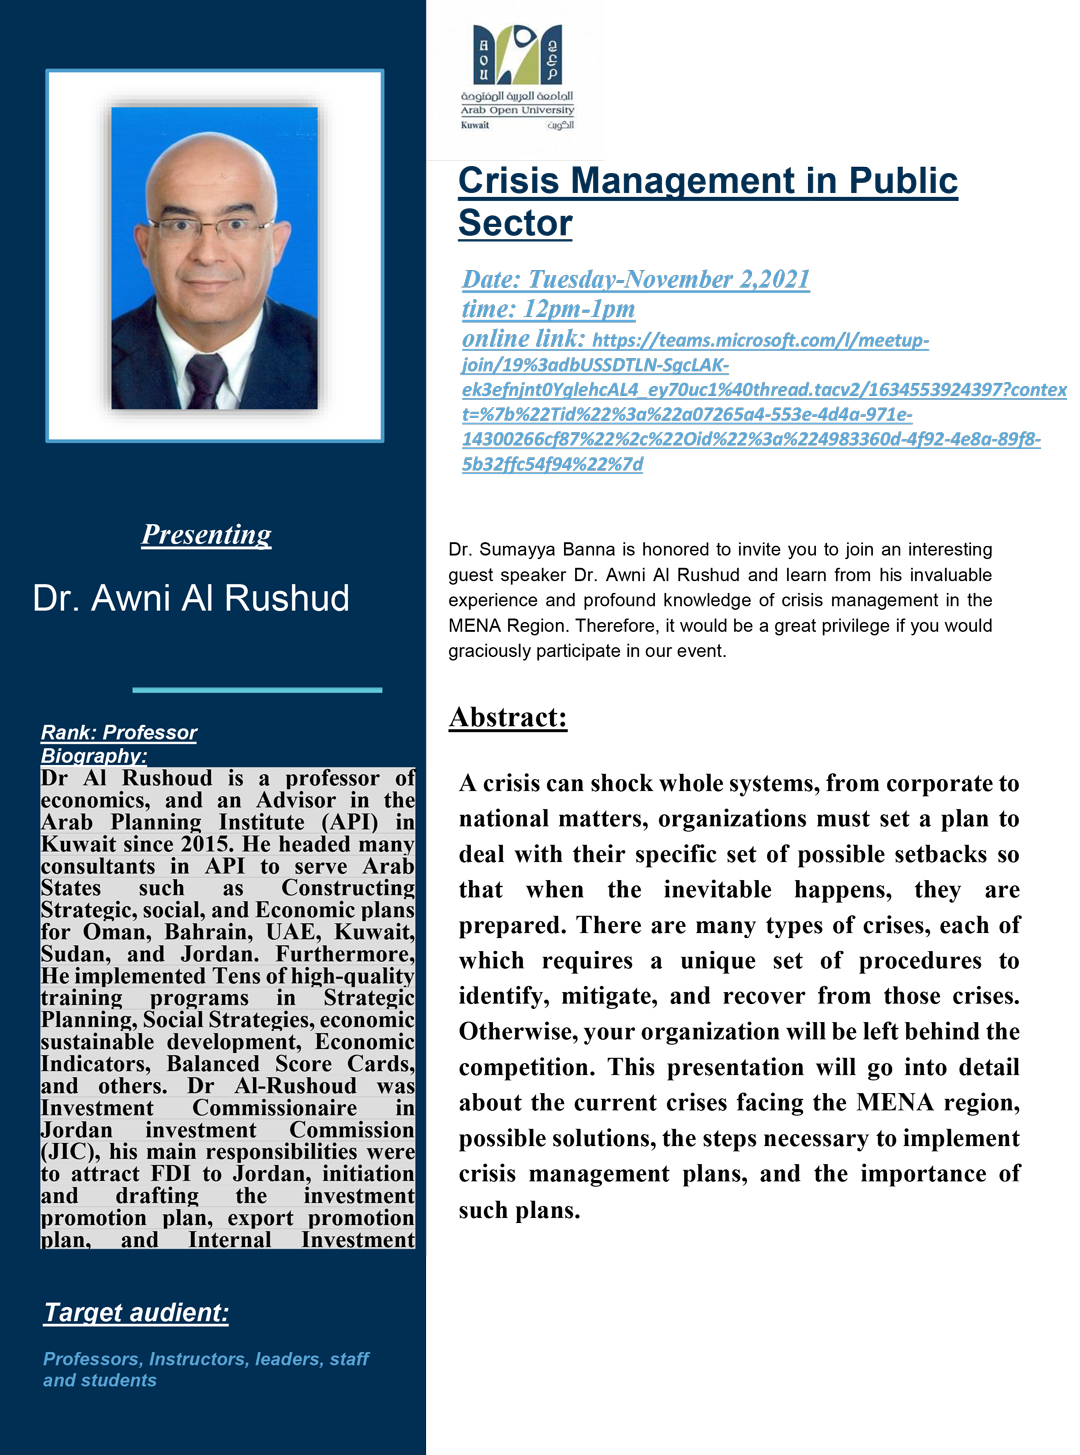 Crisis-Management-in-Public-Sector-Dr.-Awni-Al-Rushud1.jpg